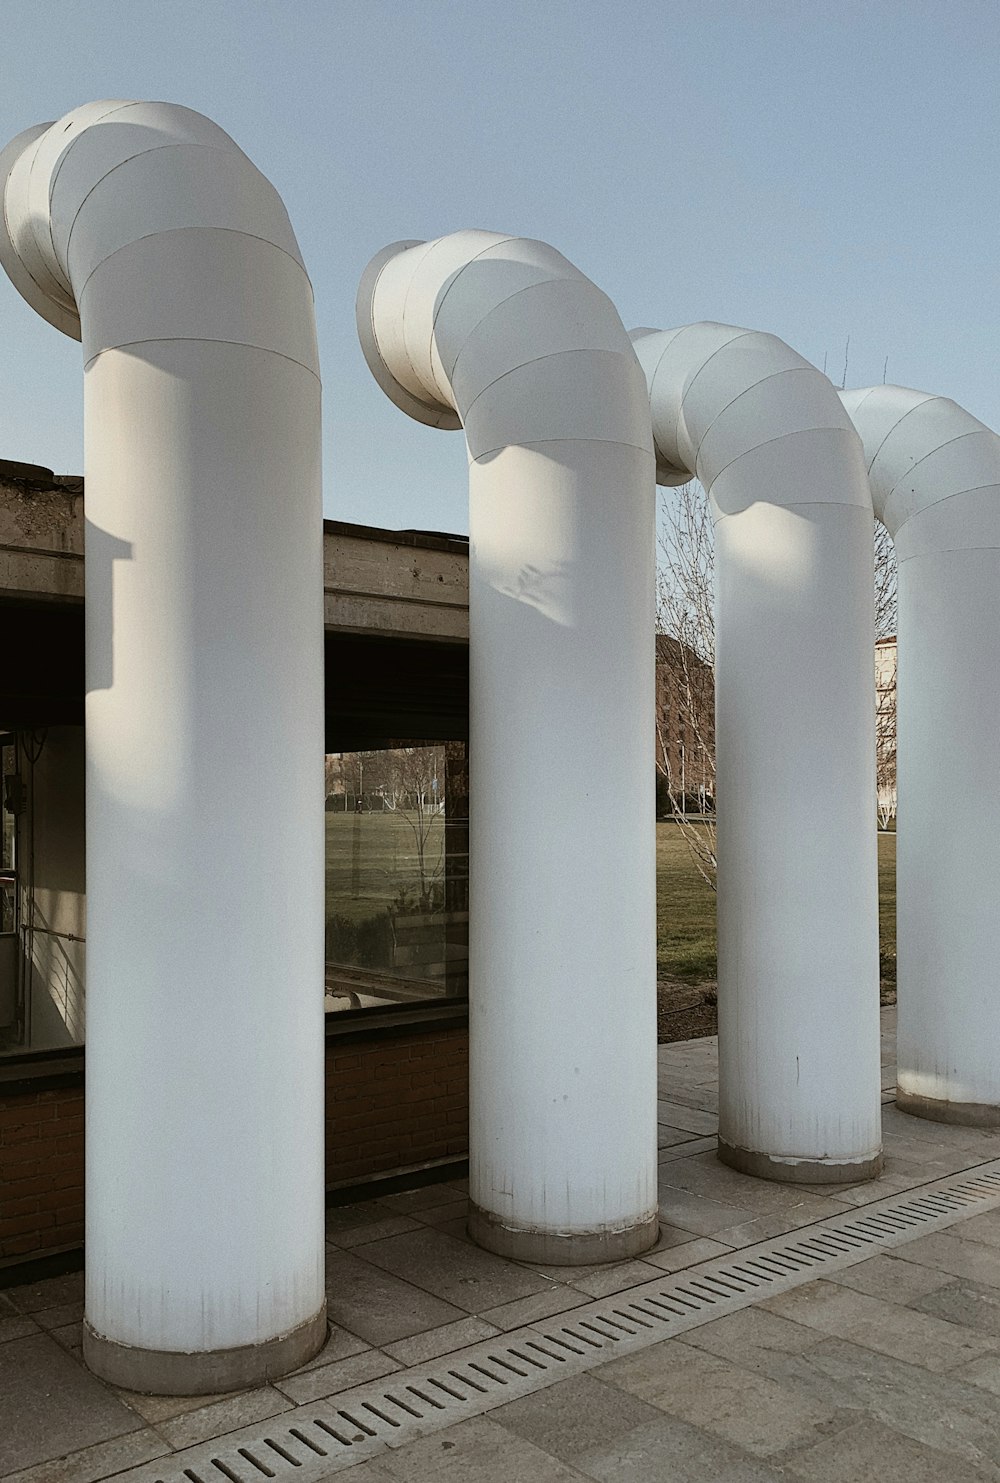 white concrete pillar near body of water during daytime